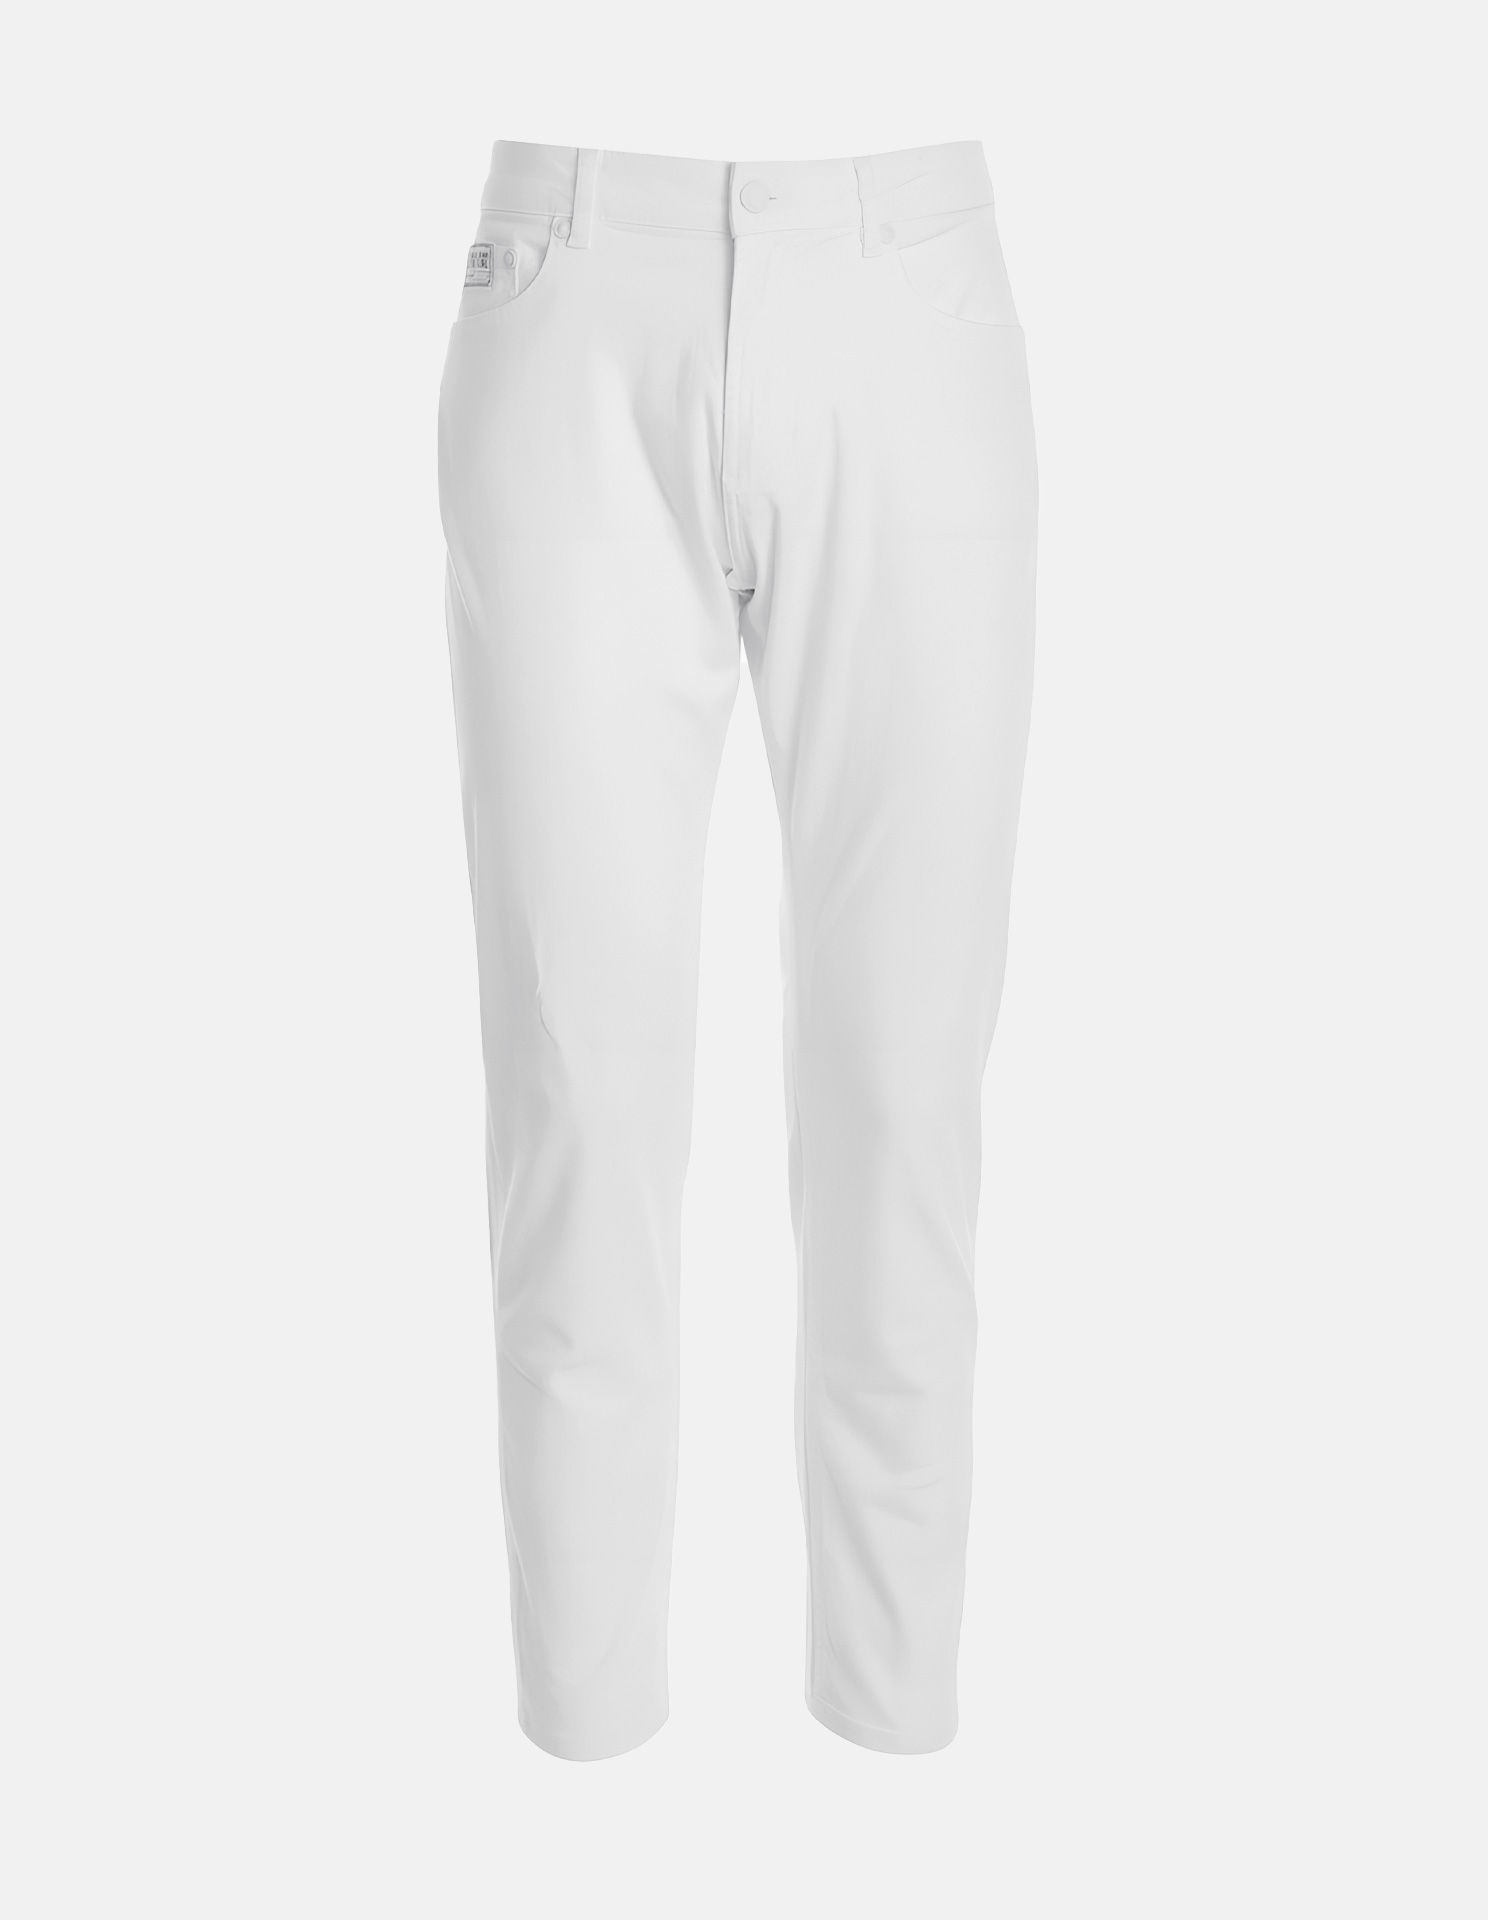 Versace White Narrow Slim Jean | George Harrison | Designer Menswear in ...